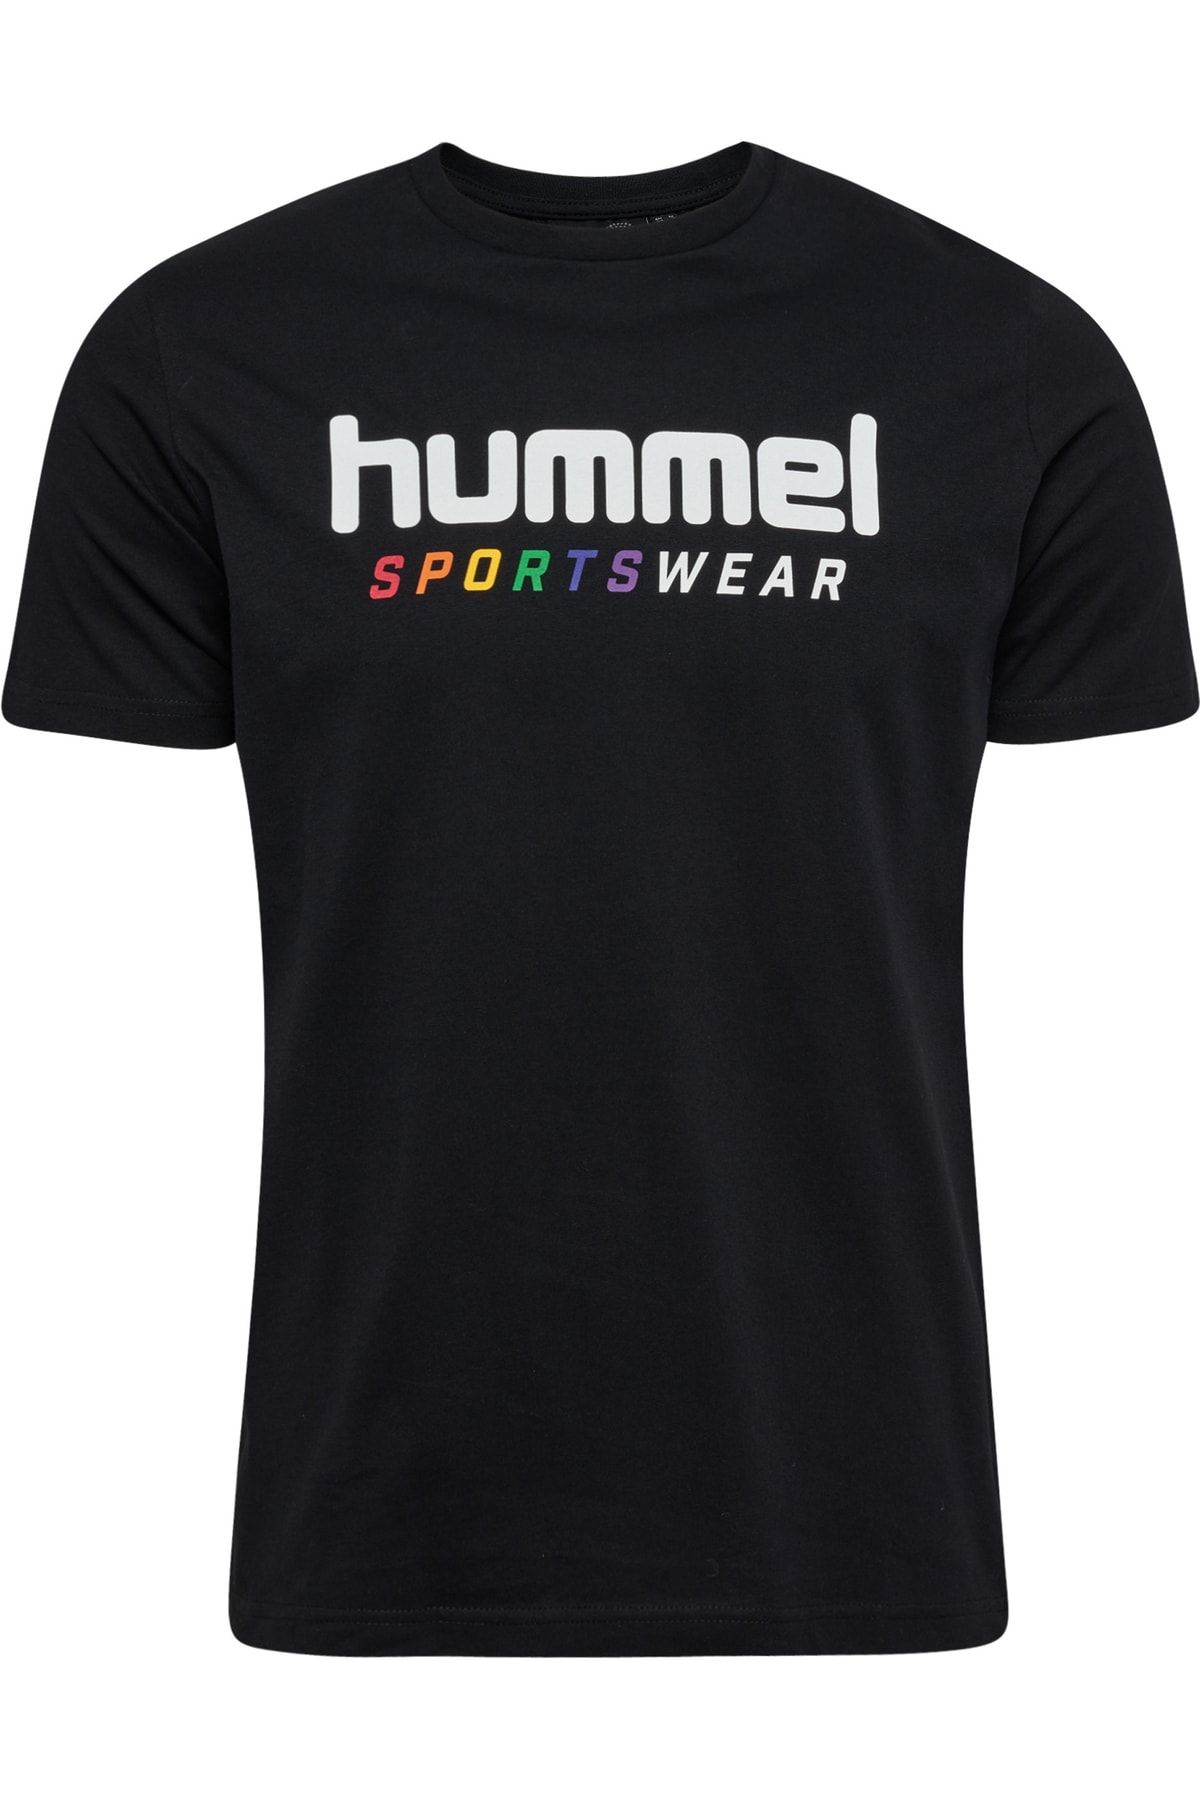 - Schwarz - T-Shirt - Trendyol HUMMEL Fit Regular